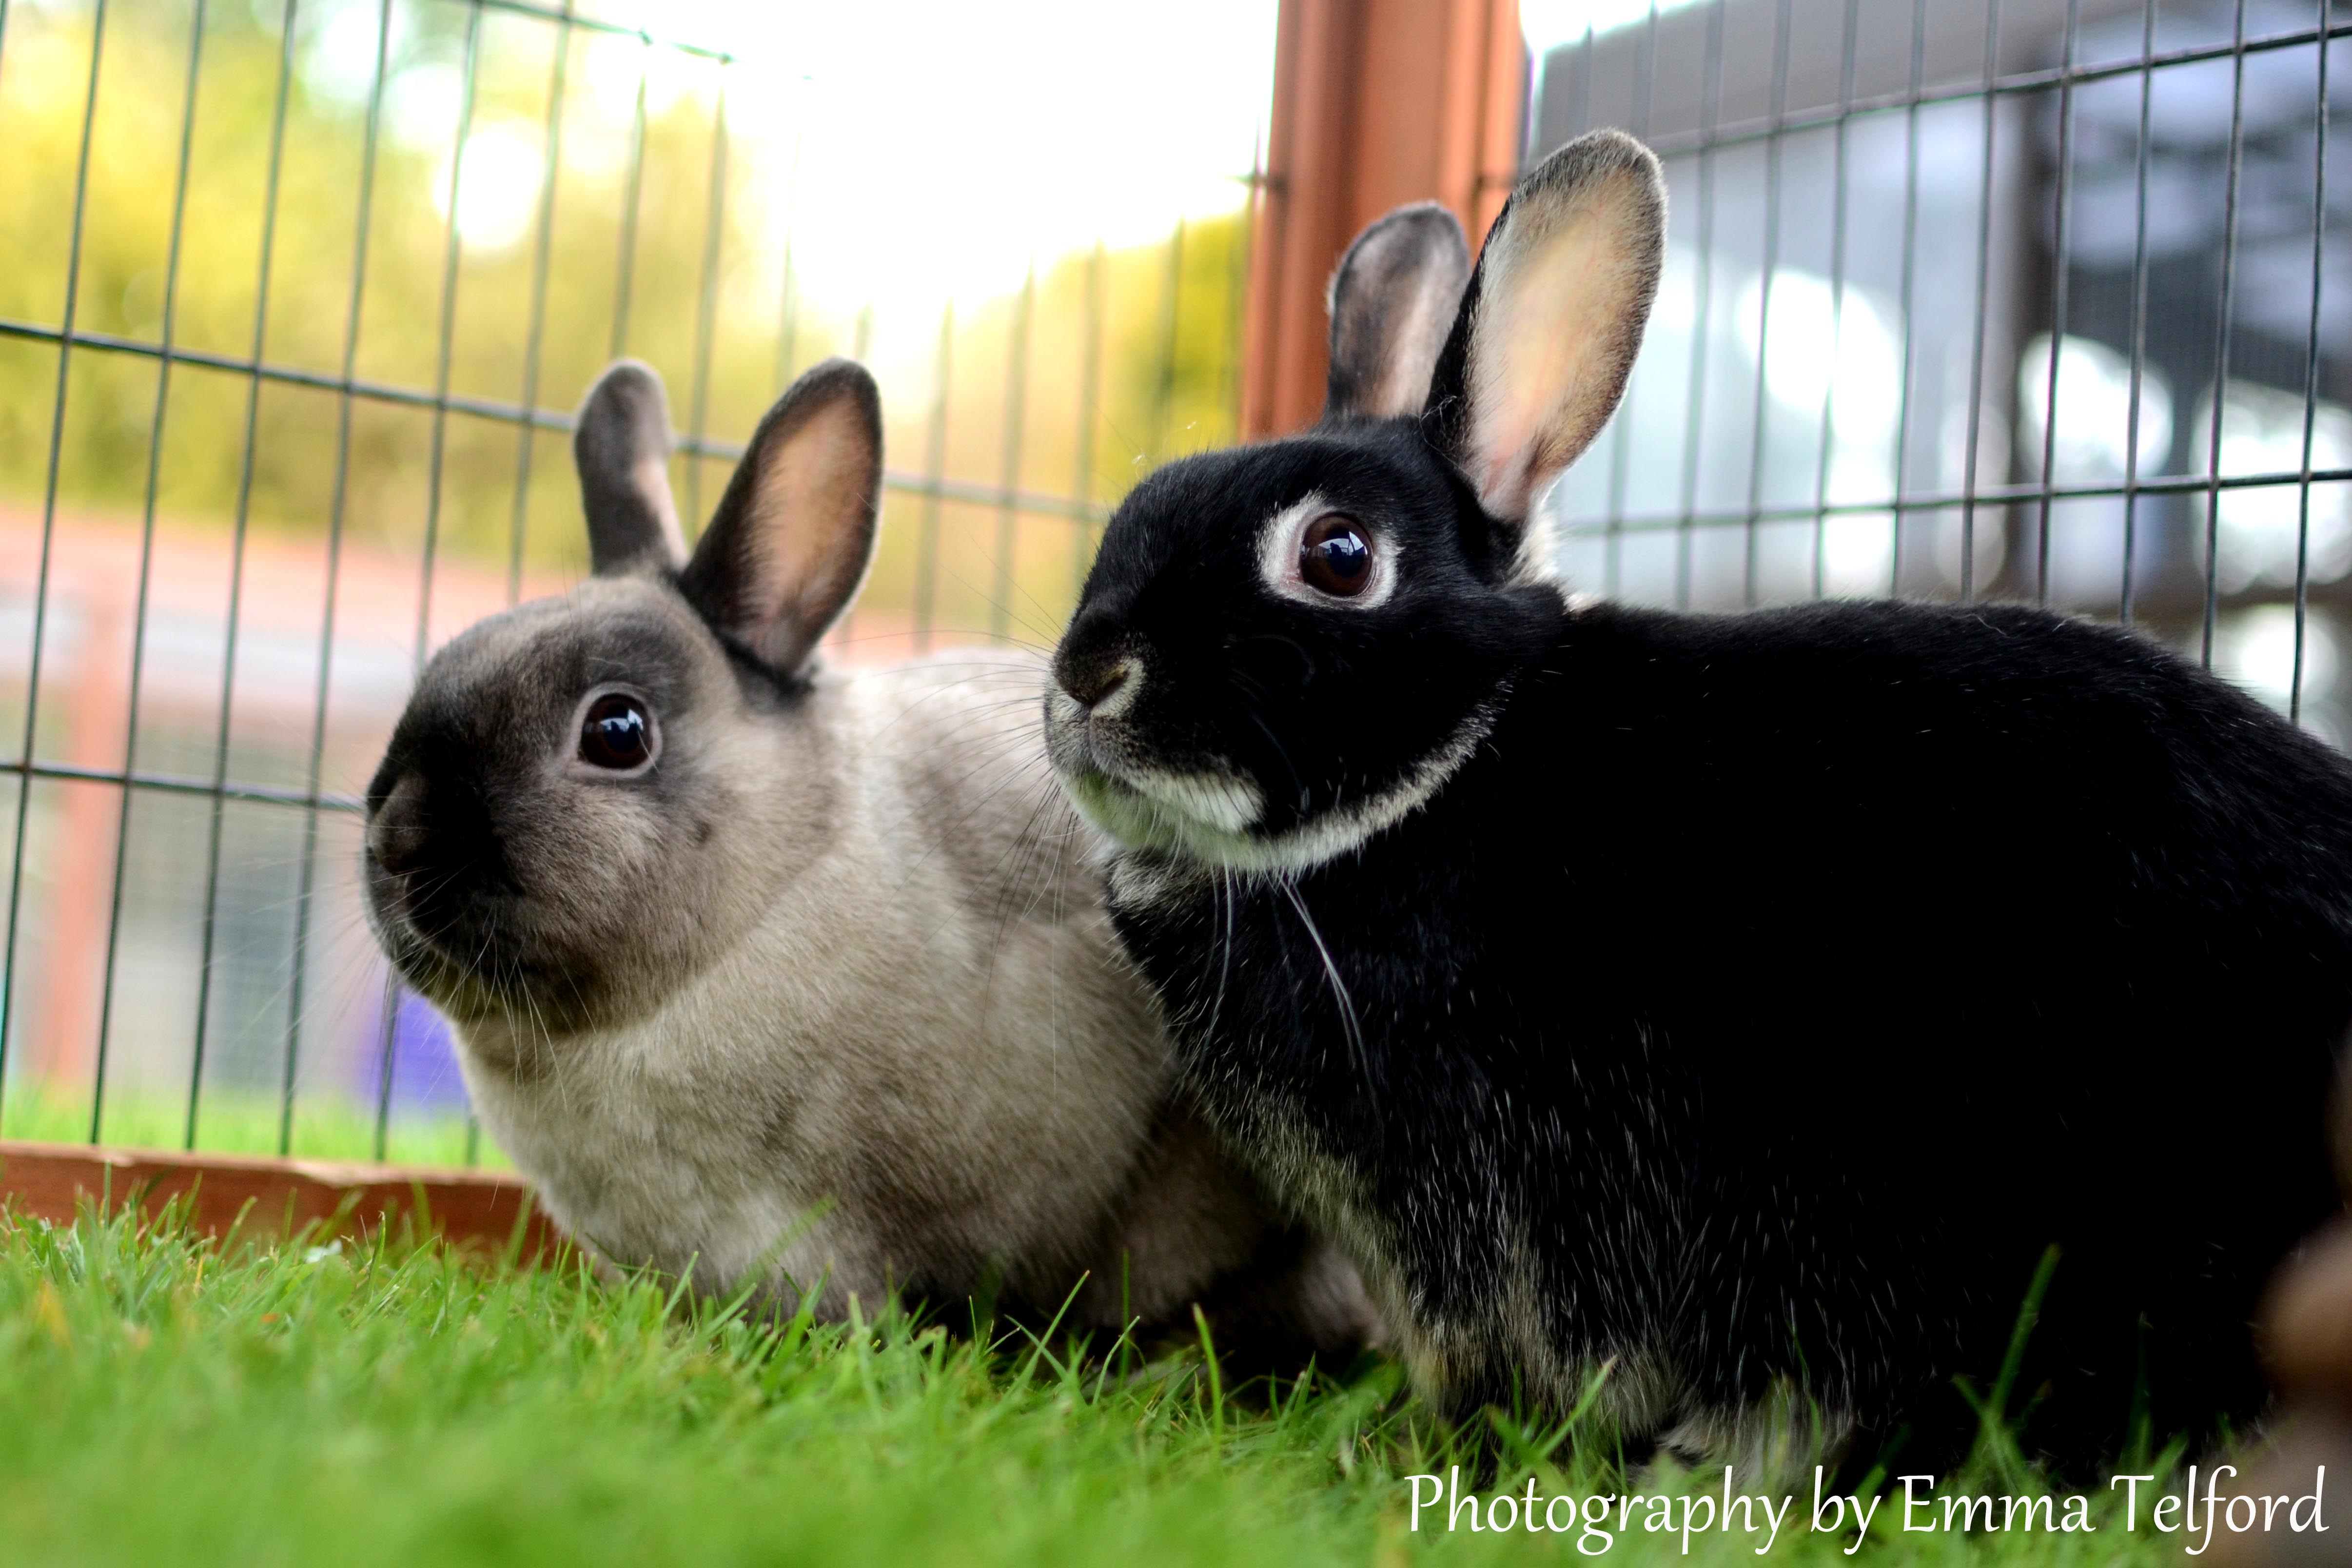 Darwin and Holly, two netherland dwarf rabbits